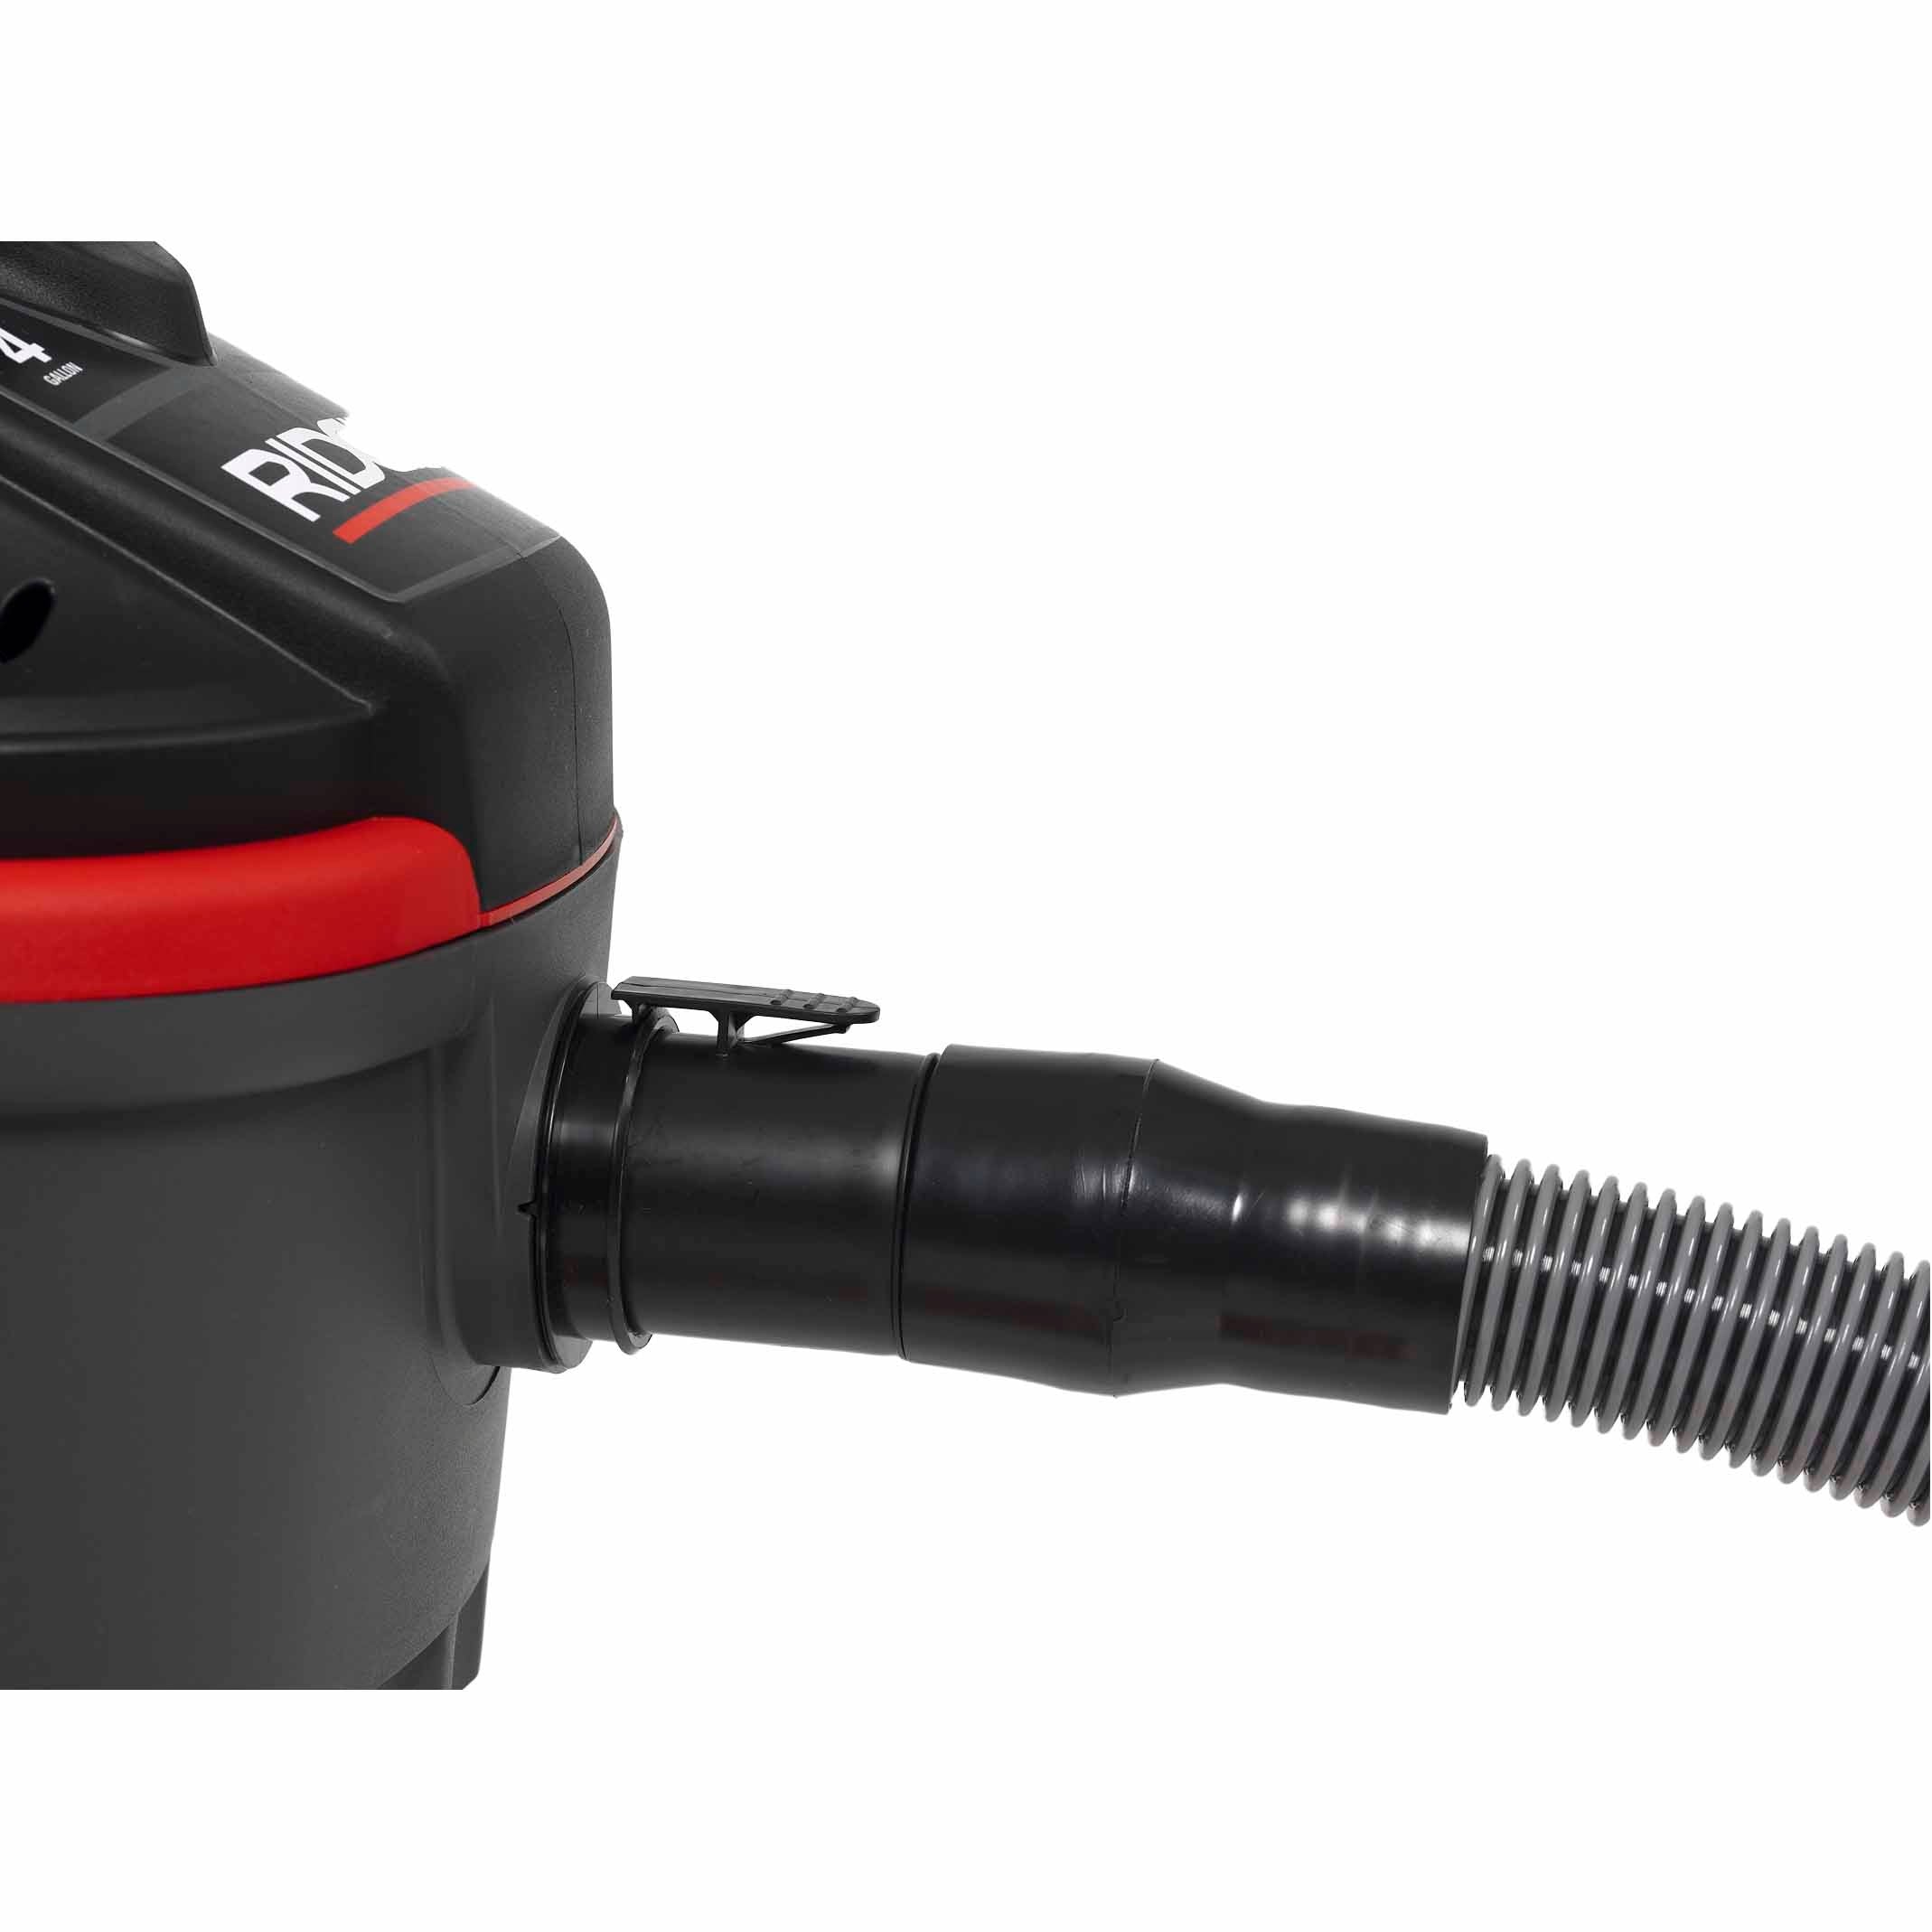 RIDGID 50318 4500RV ProPack Wet Dry Vac, 4.5-Gallon Portable Wet Dry  Vacuum, Blower Port & VT2534 7-Piece Auto Detailing Vacuum Hose Accessory  Kit for